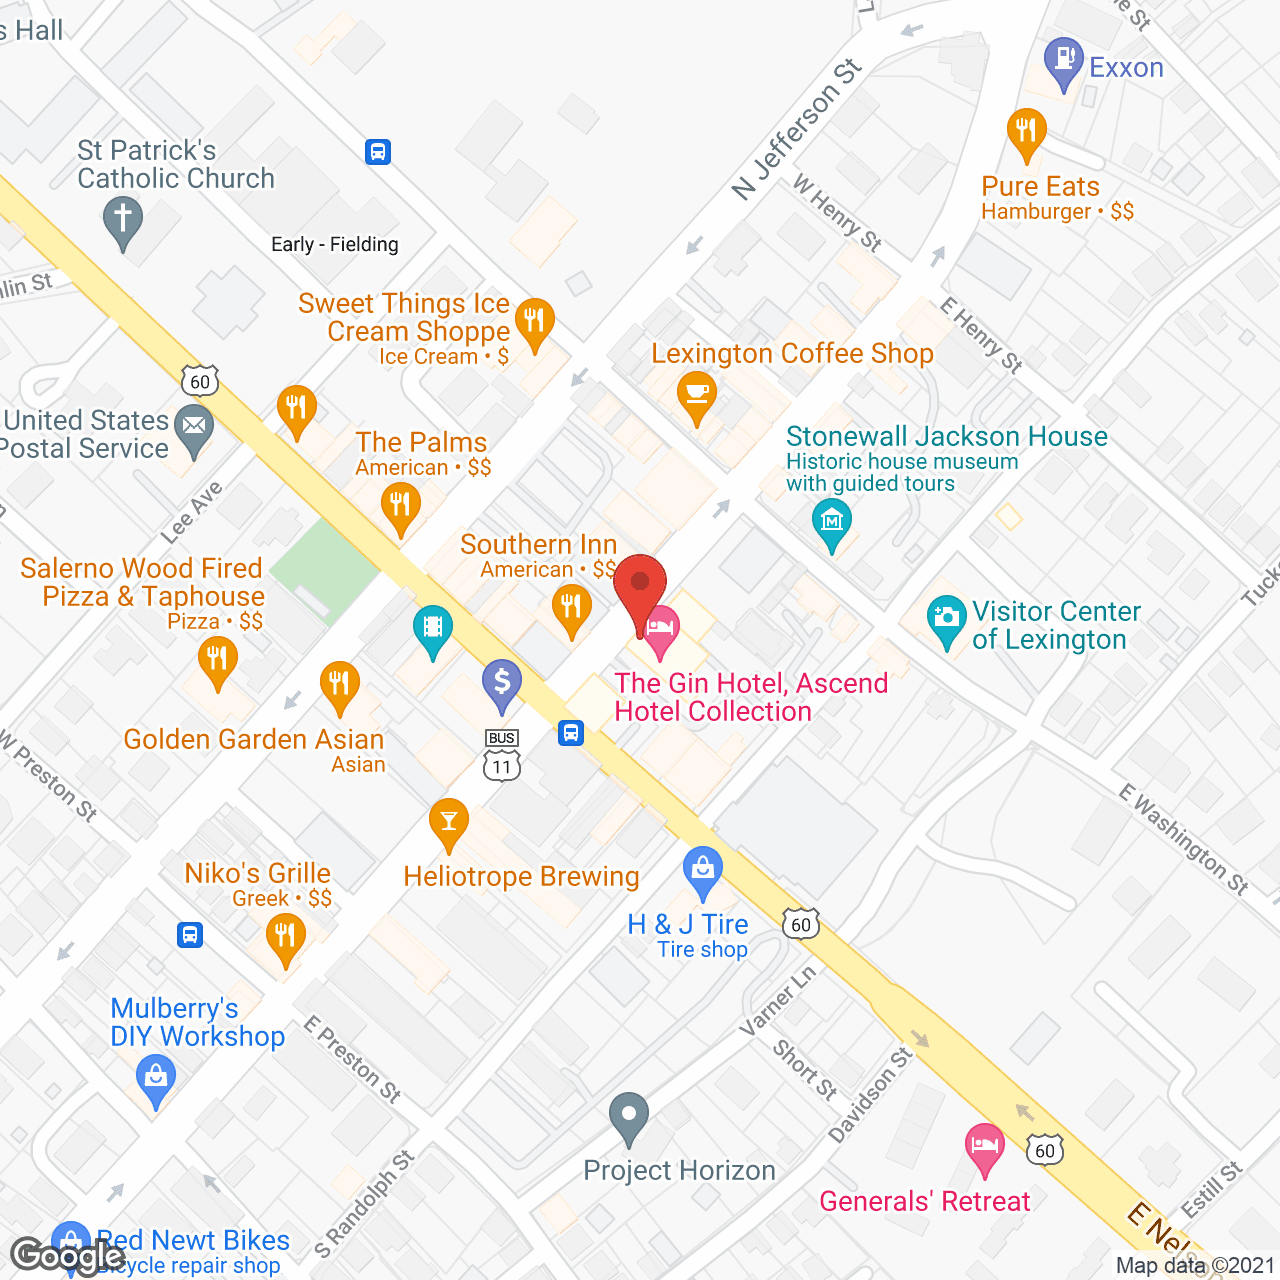 Robert E Lee Building in google map